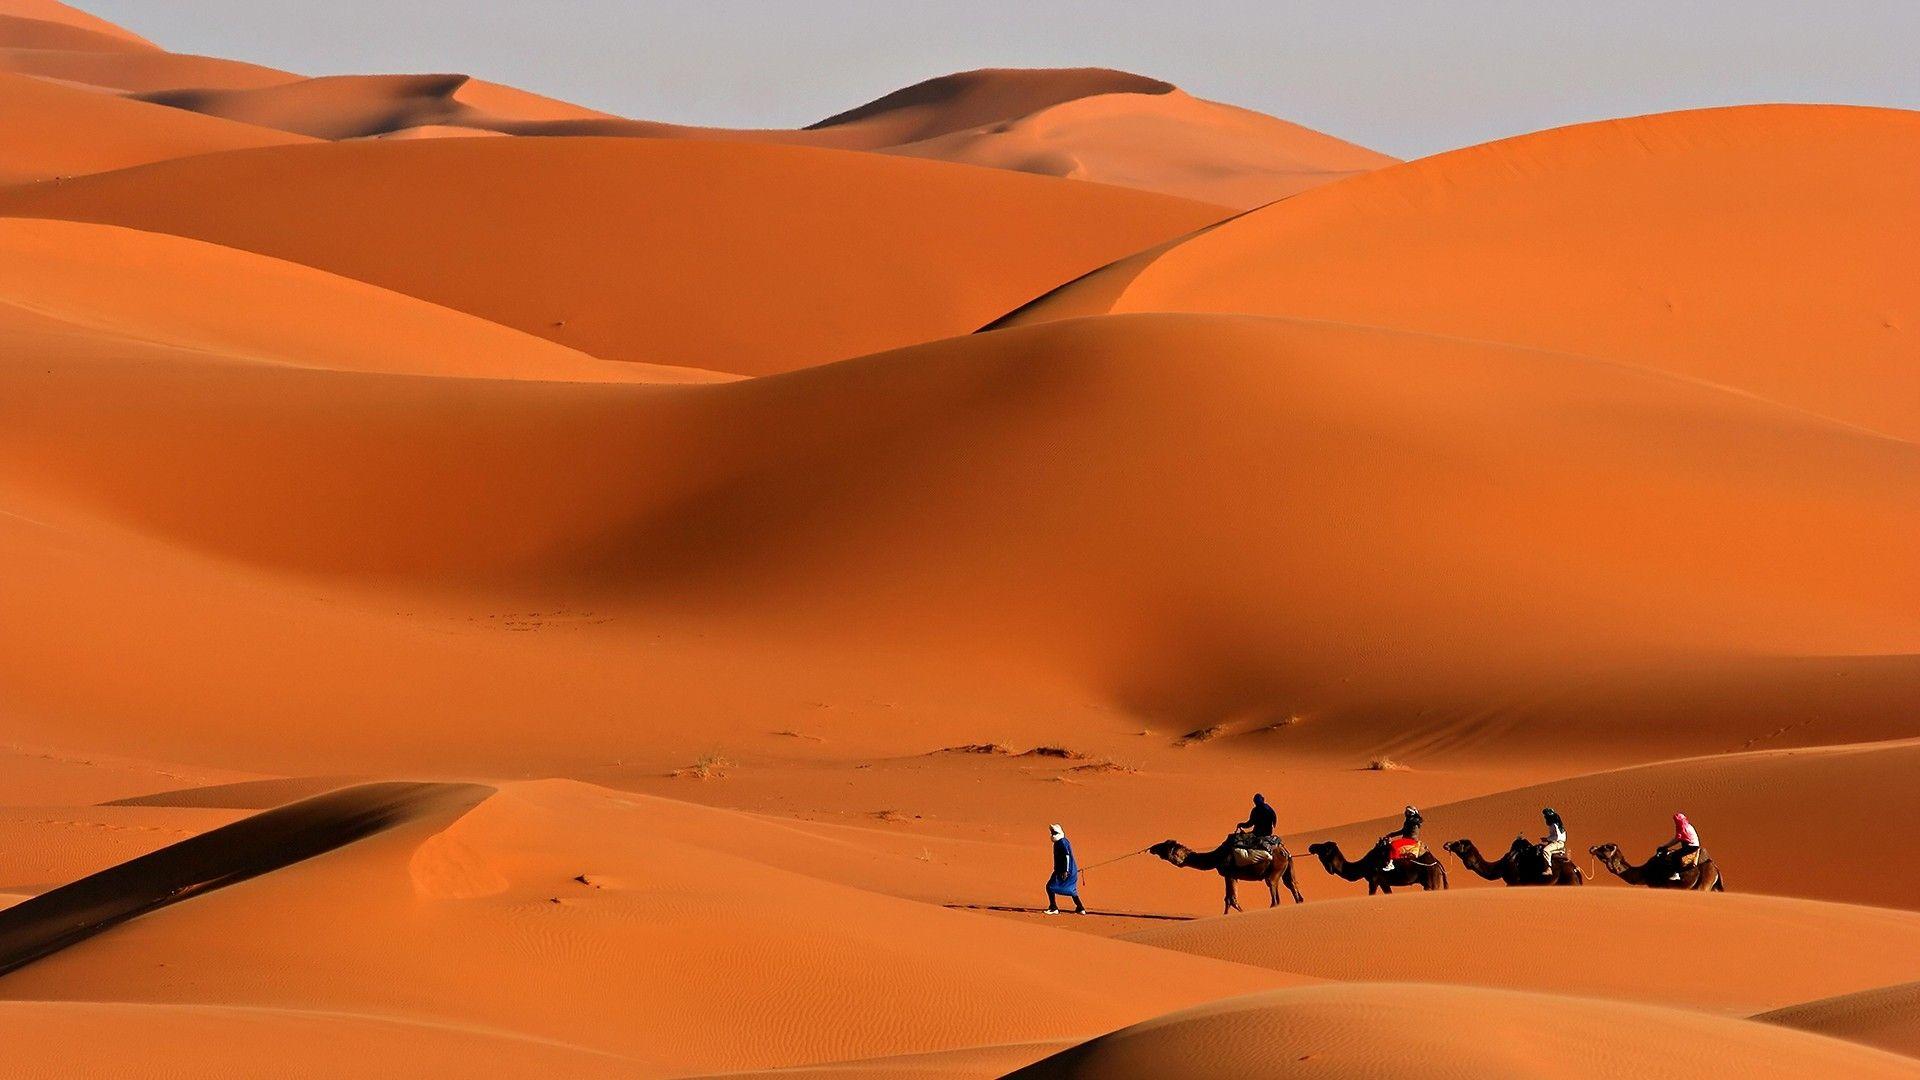 Download Wallpaper 1920x1080 caravan, desert, camels, sand, heat. Deserts of the world, Desert tour, Camels